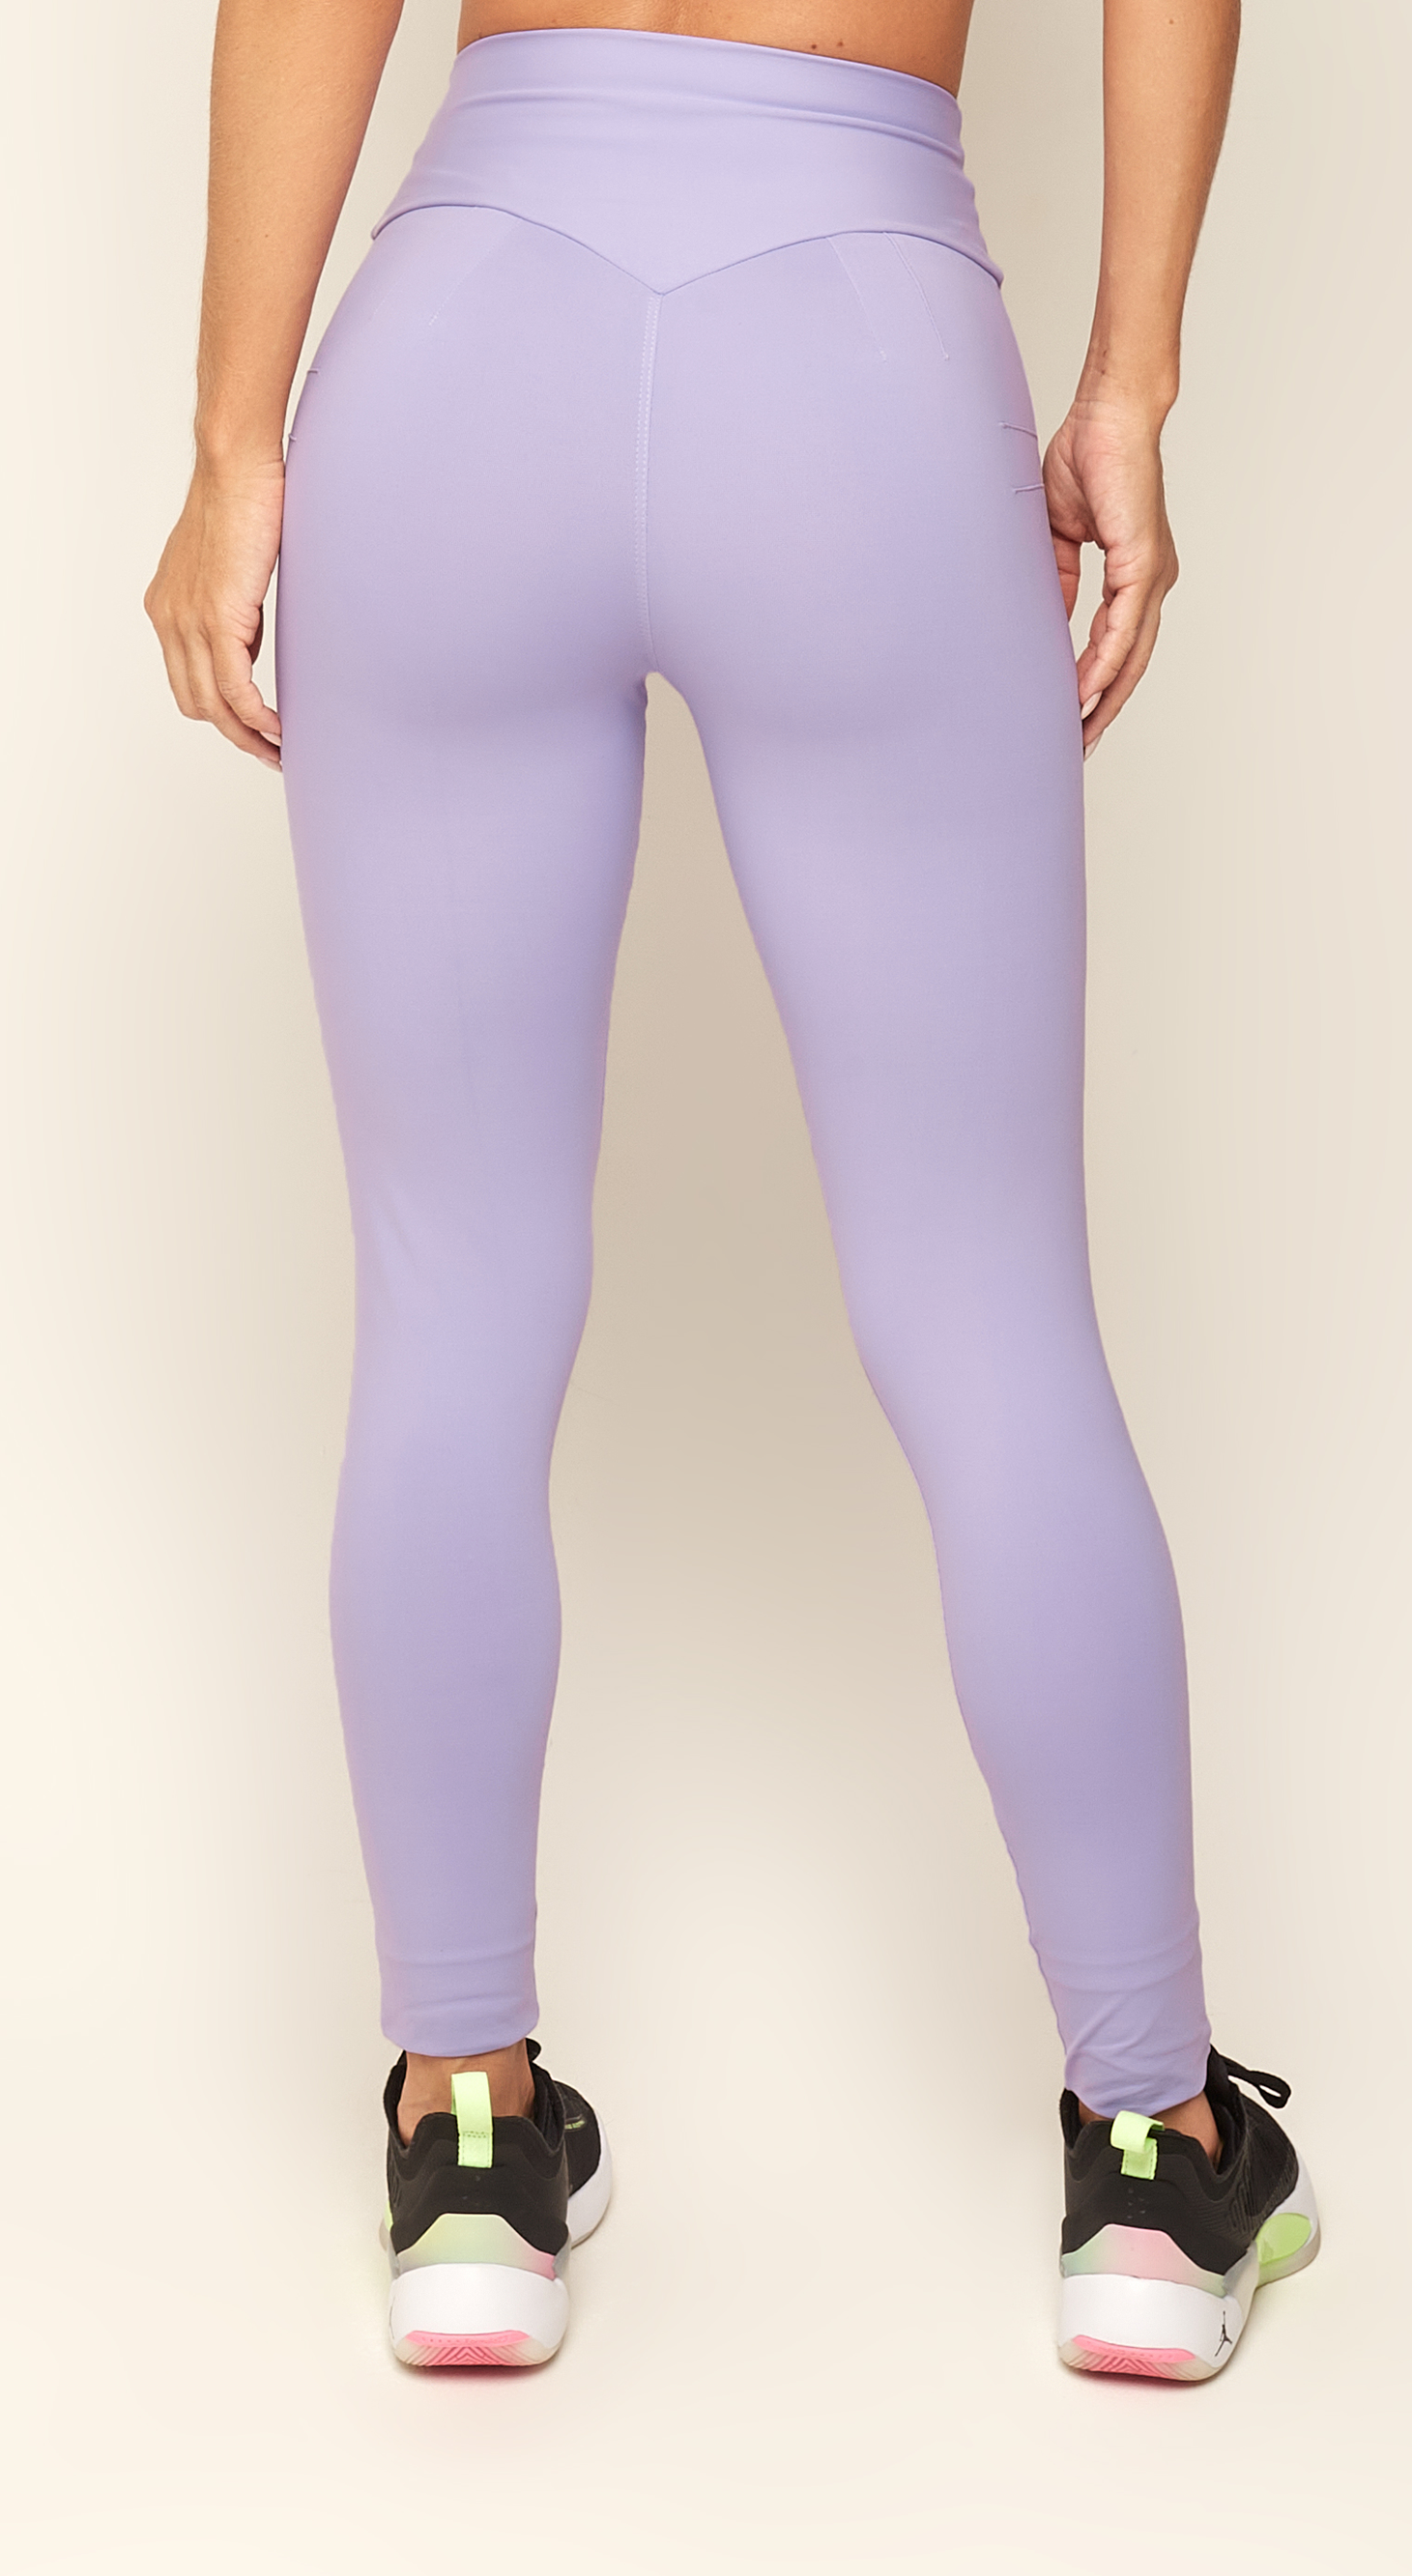 Solid Lavender Leggings